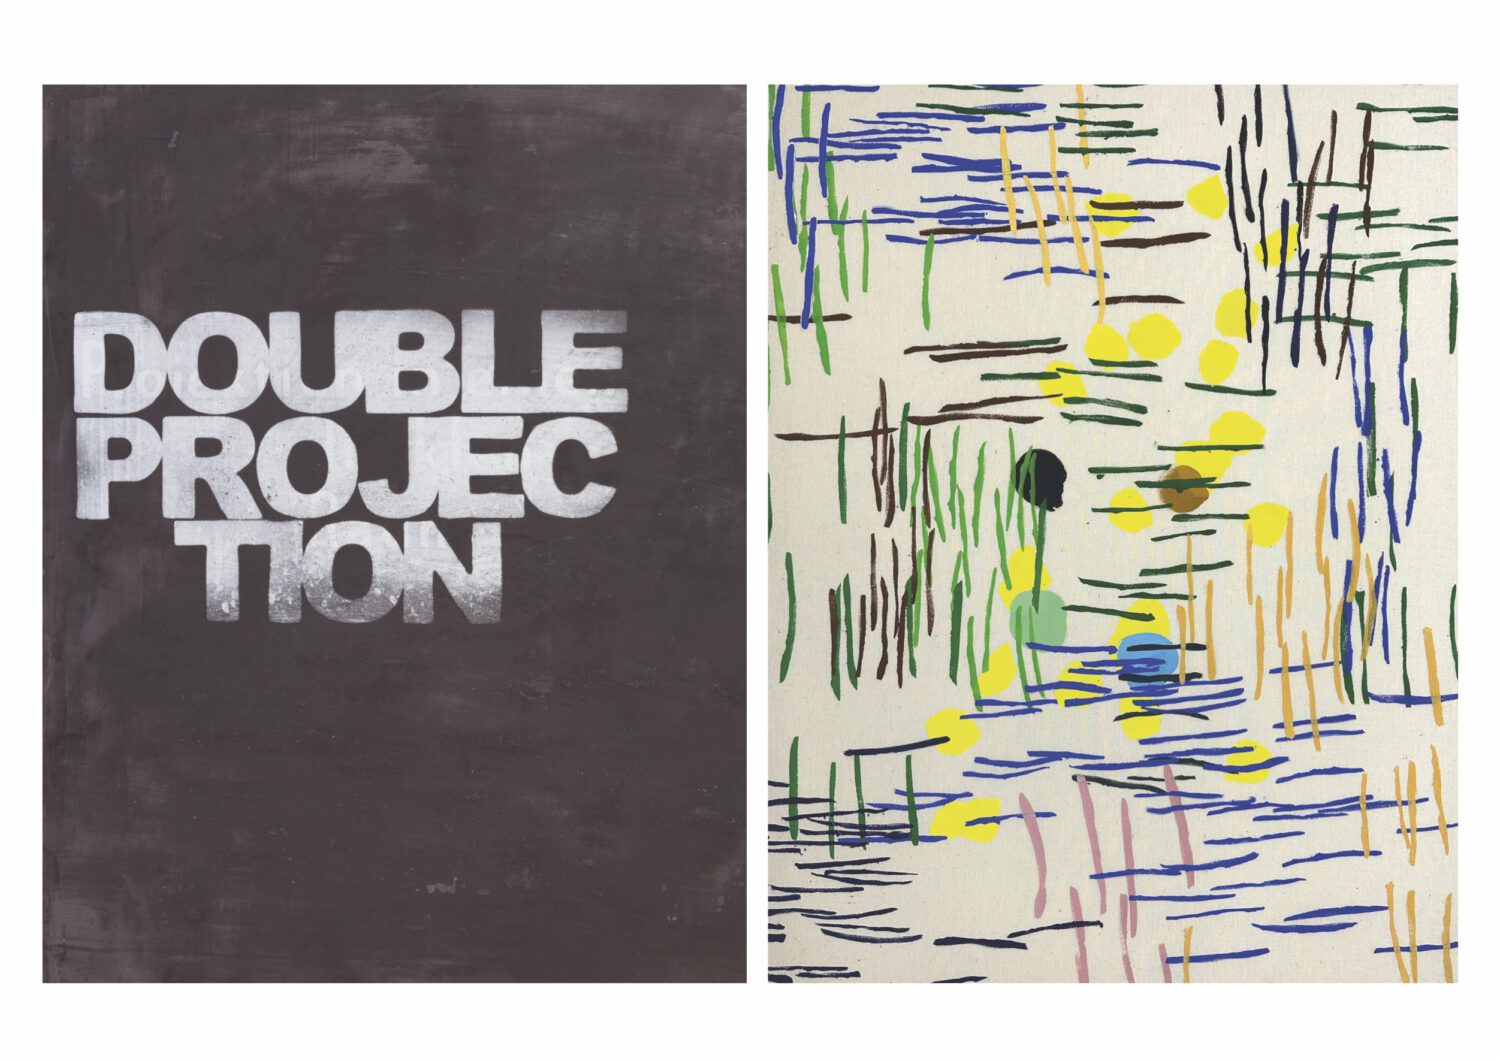 1 Galerie Ruberl Einladungskarte Double Projection 2